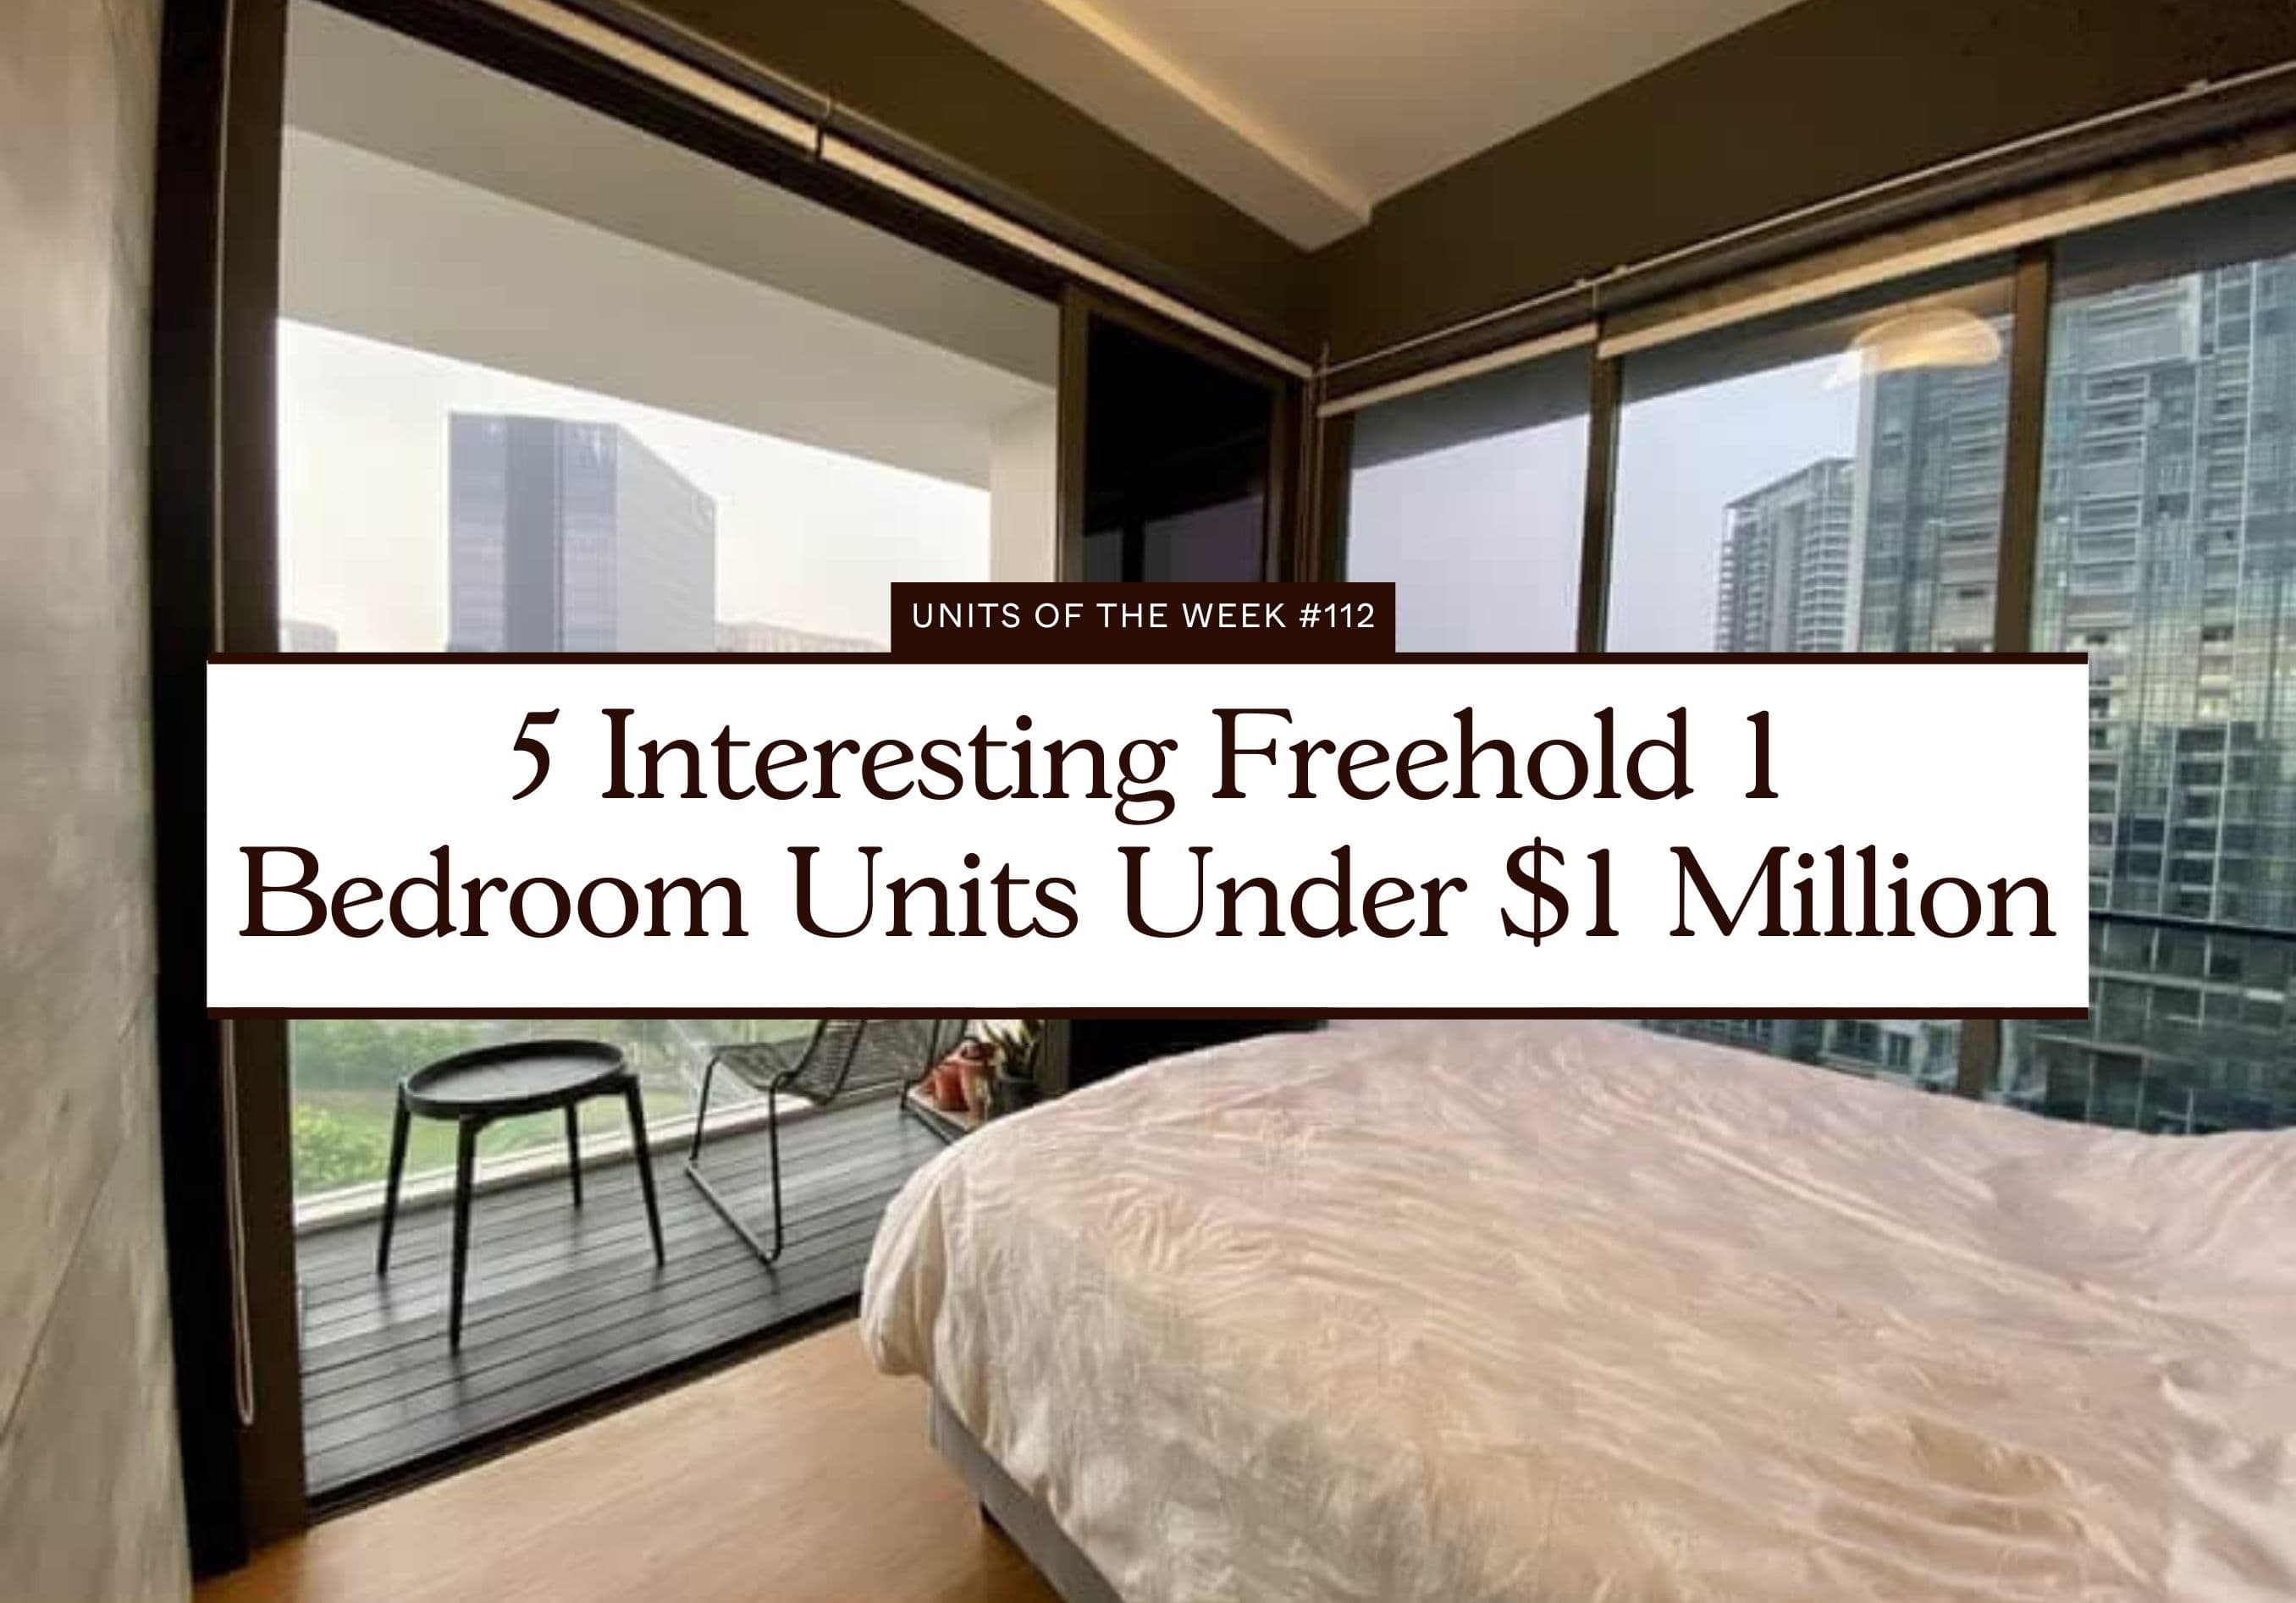 5 Interesting Freehold 1 Bedroom Units Under 1 Million